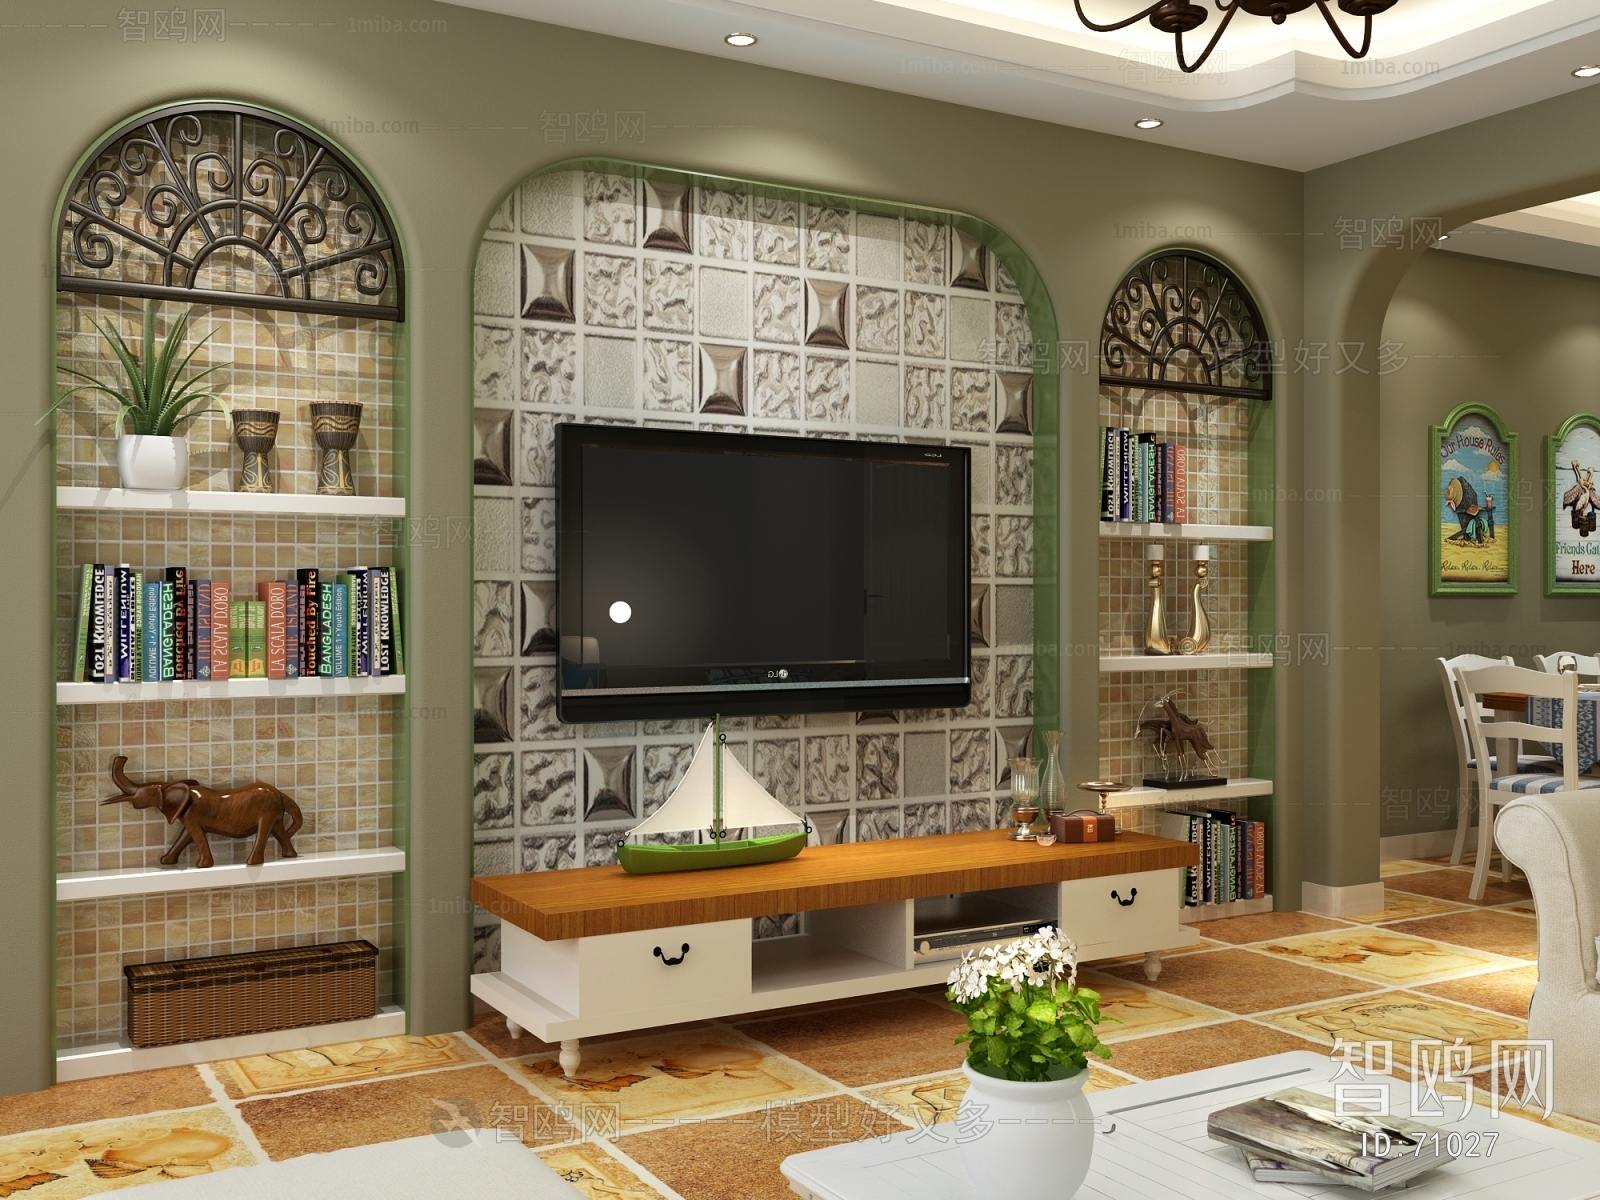 Idyllic Style A Living Room